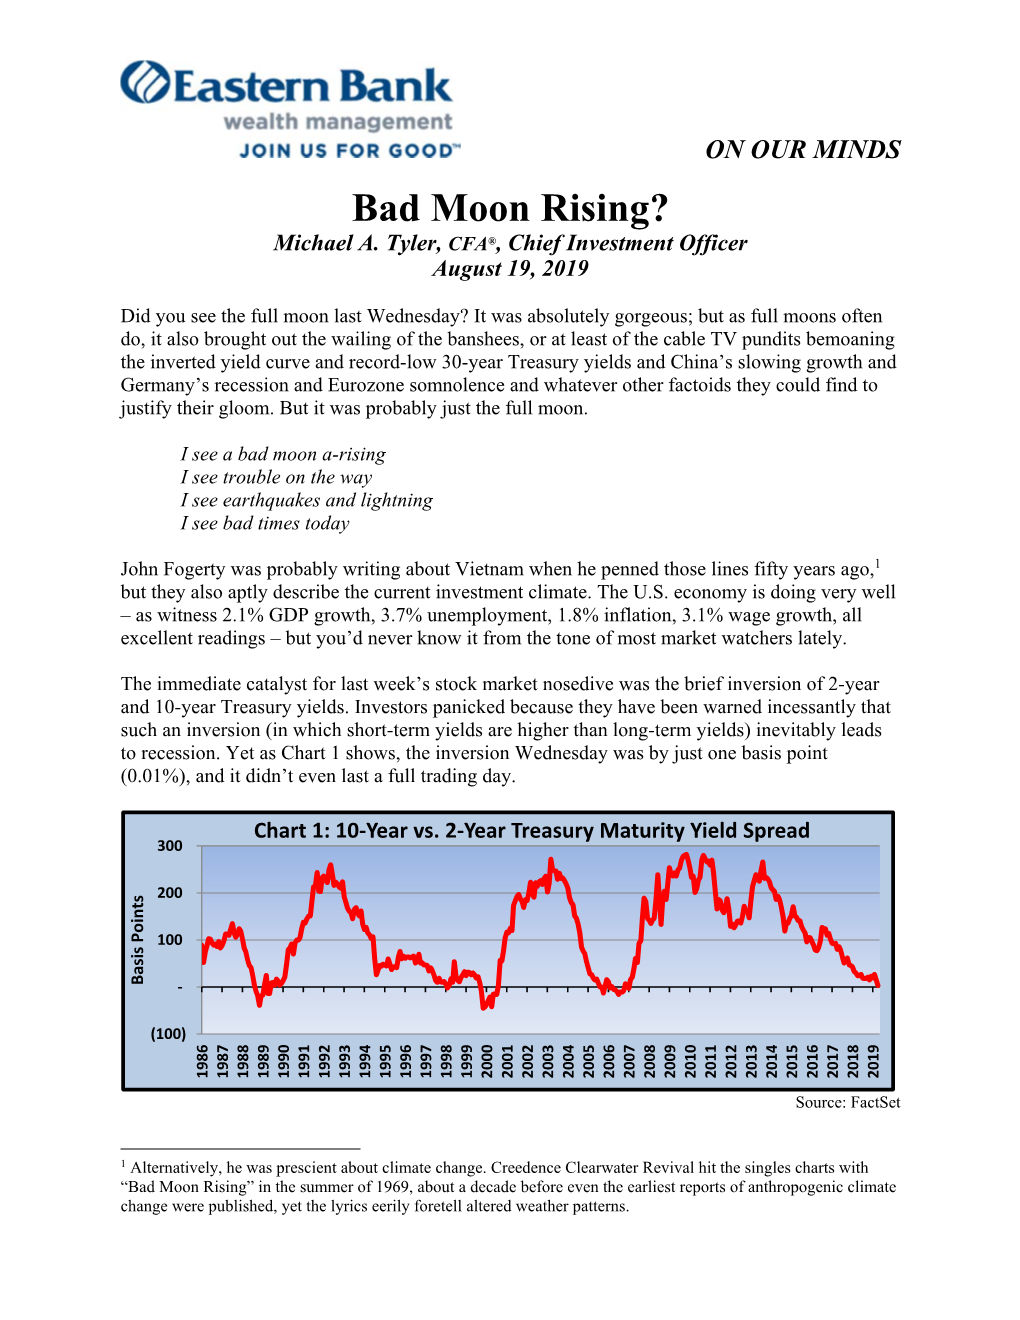 Bad Moon Rising? Michael A